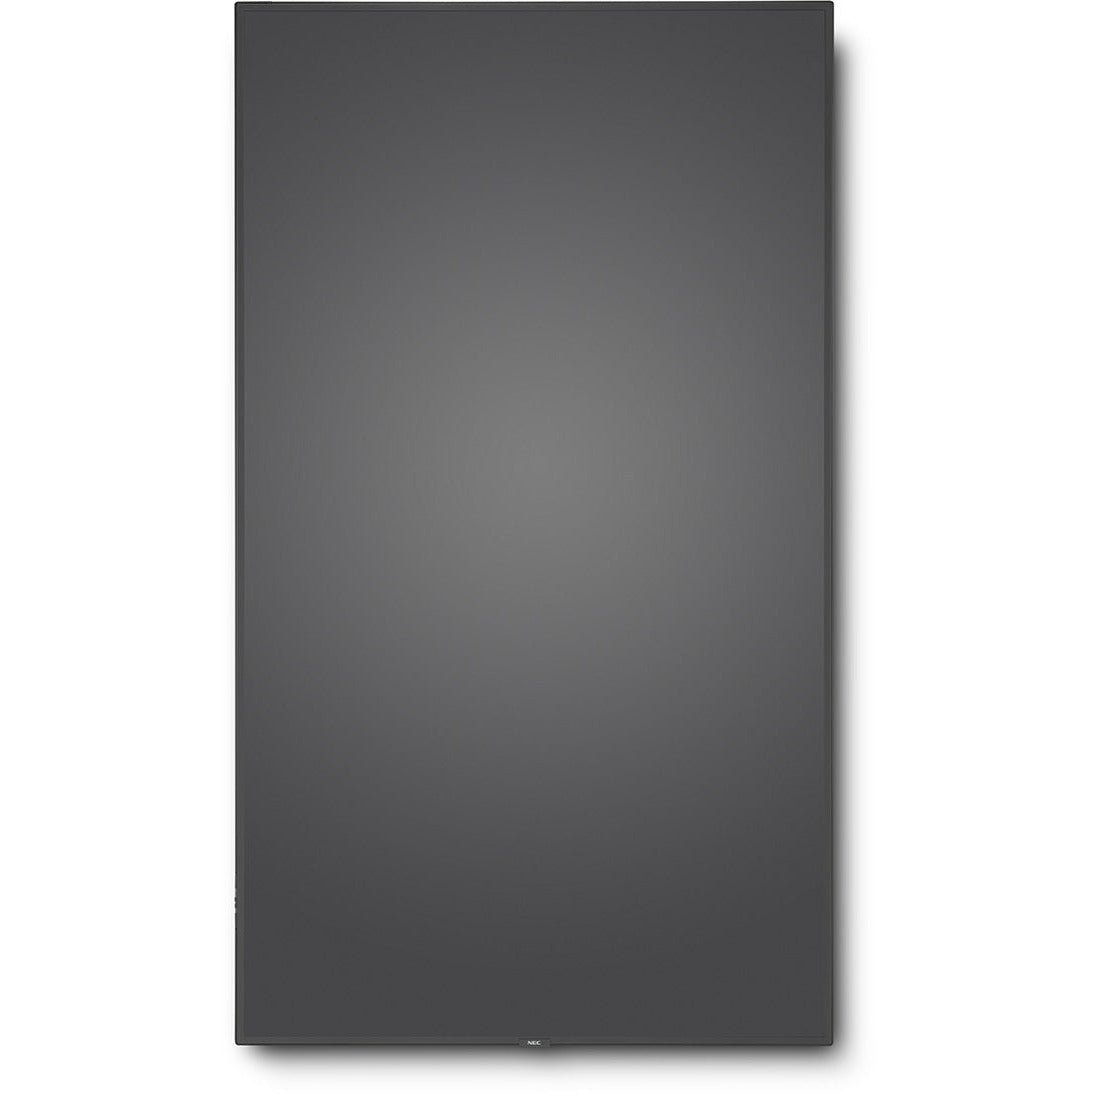 NEC MultiSync® C981Q LCD 98" Midrange Large Format Display